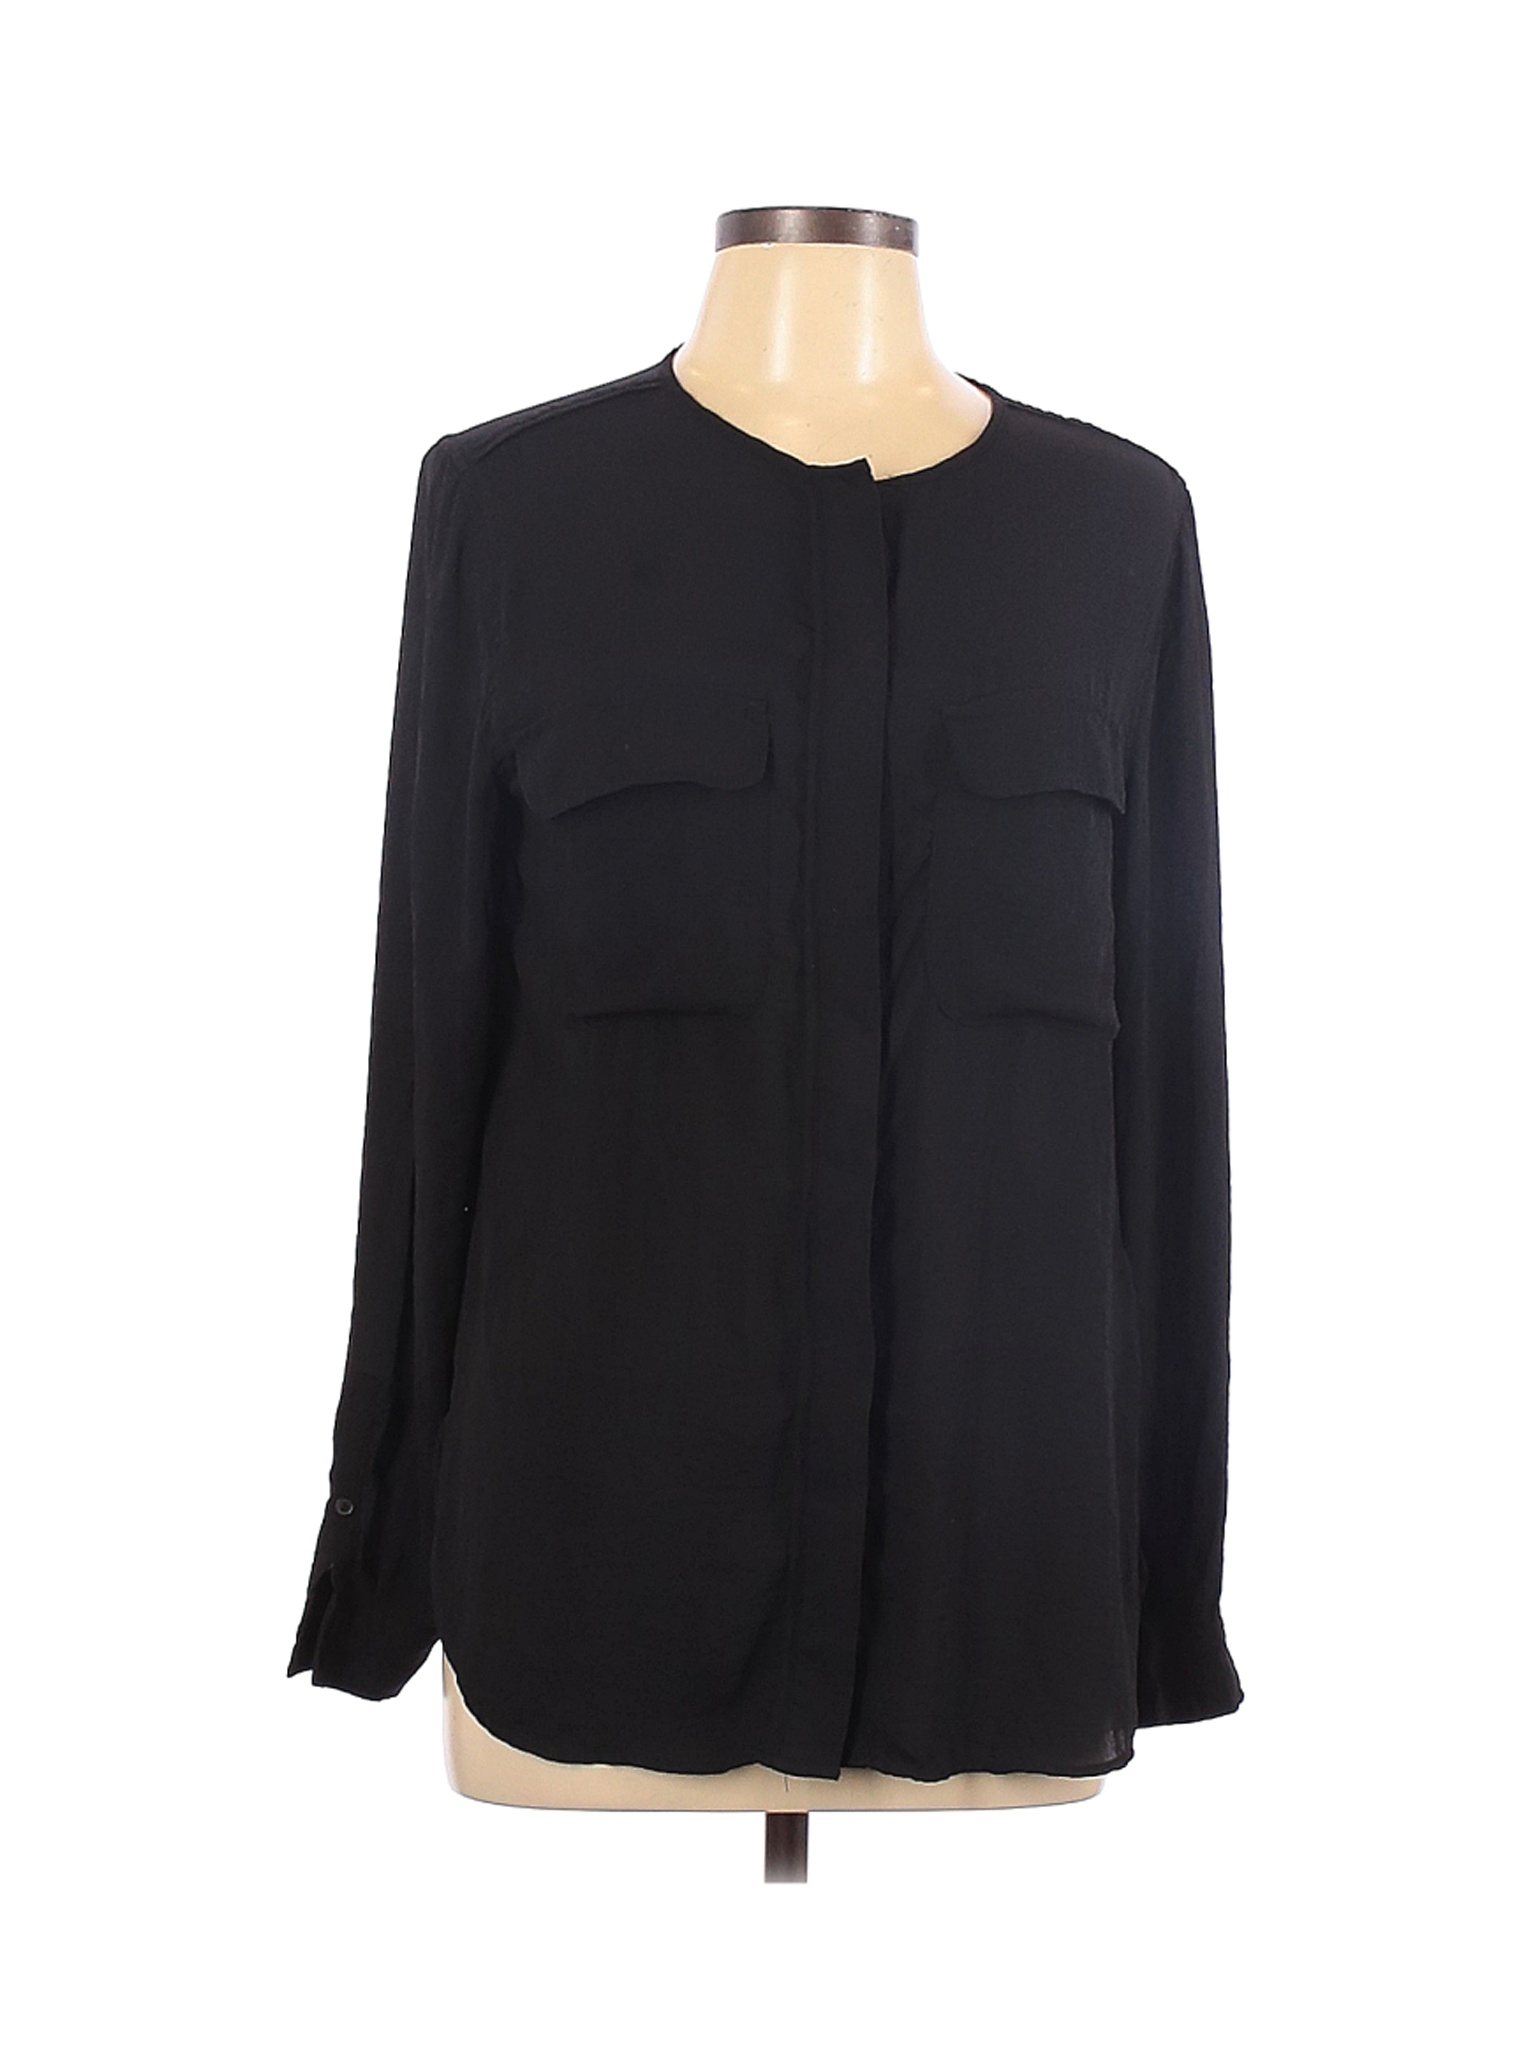 H&M Women Black Long Sleeve Top 10 | eBay